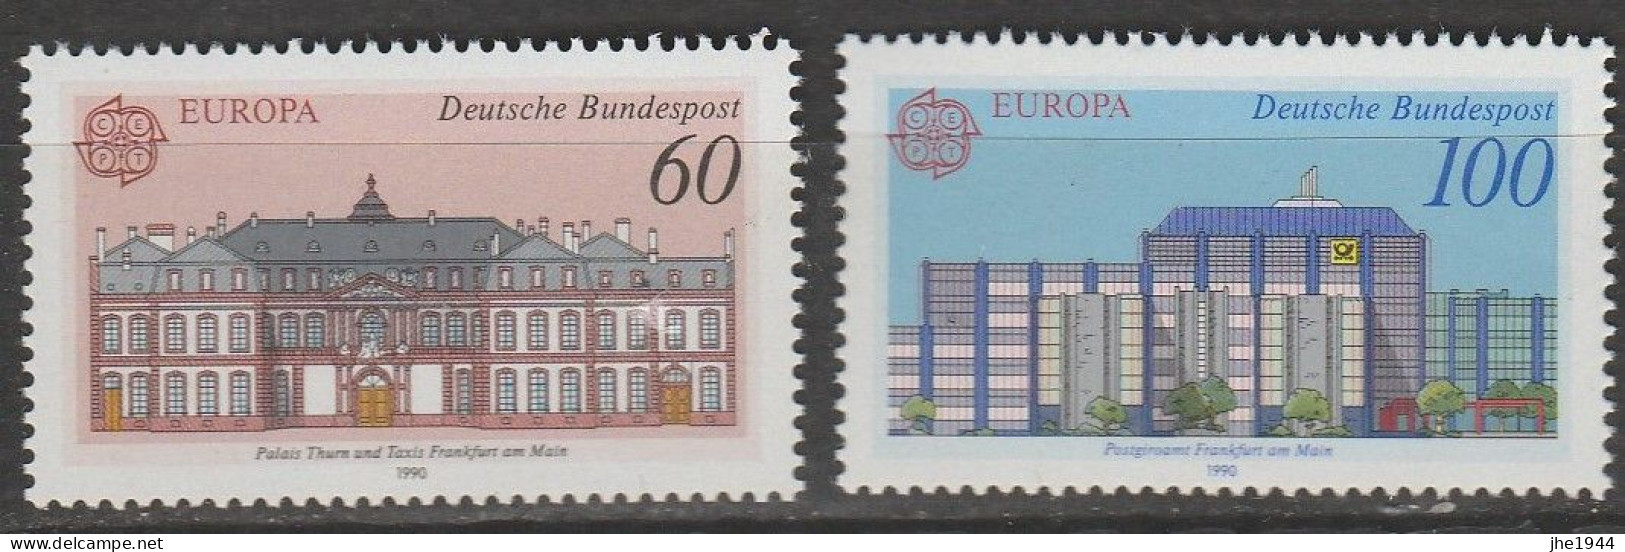 Allemagne Europa 1990 N° 1293/ 1294 ** Ets Postaux - 1990